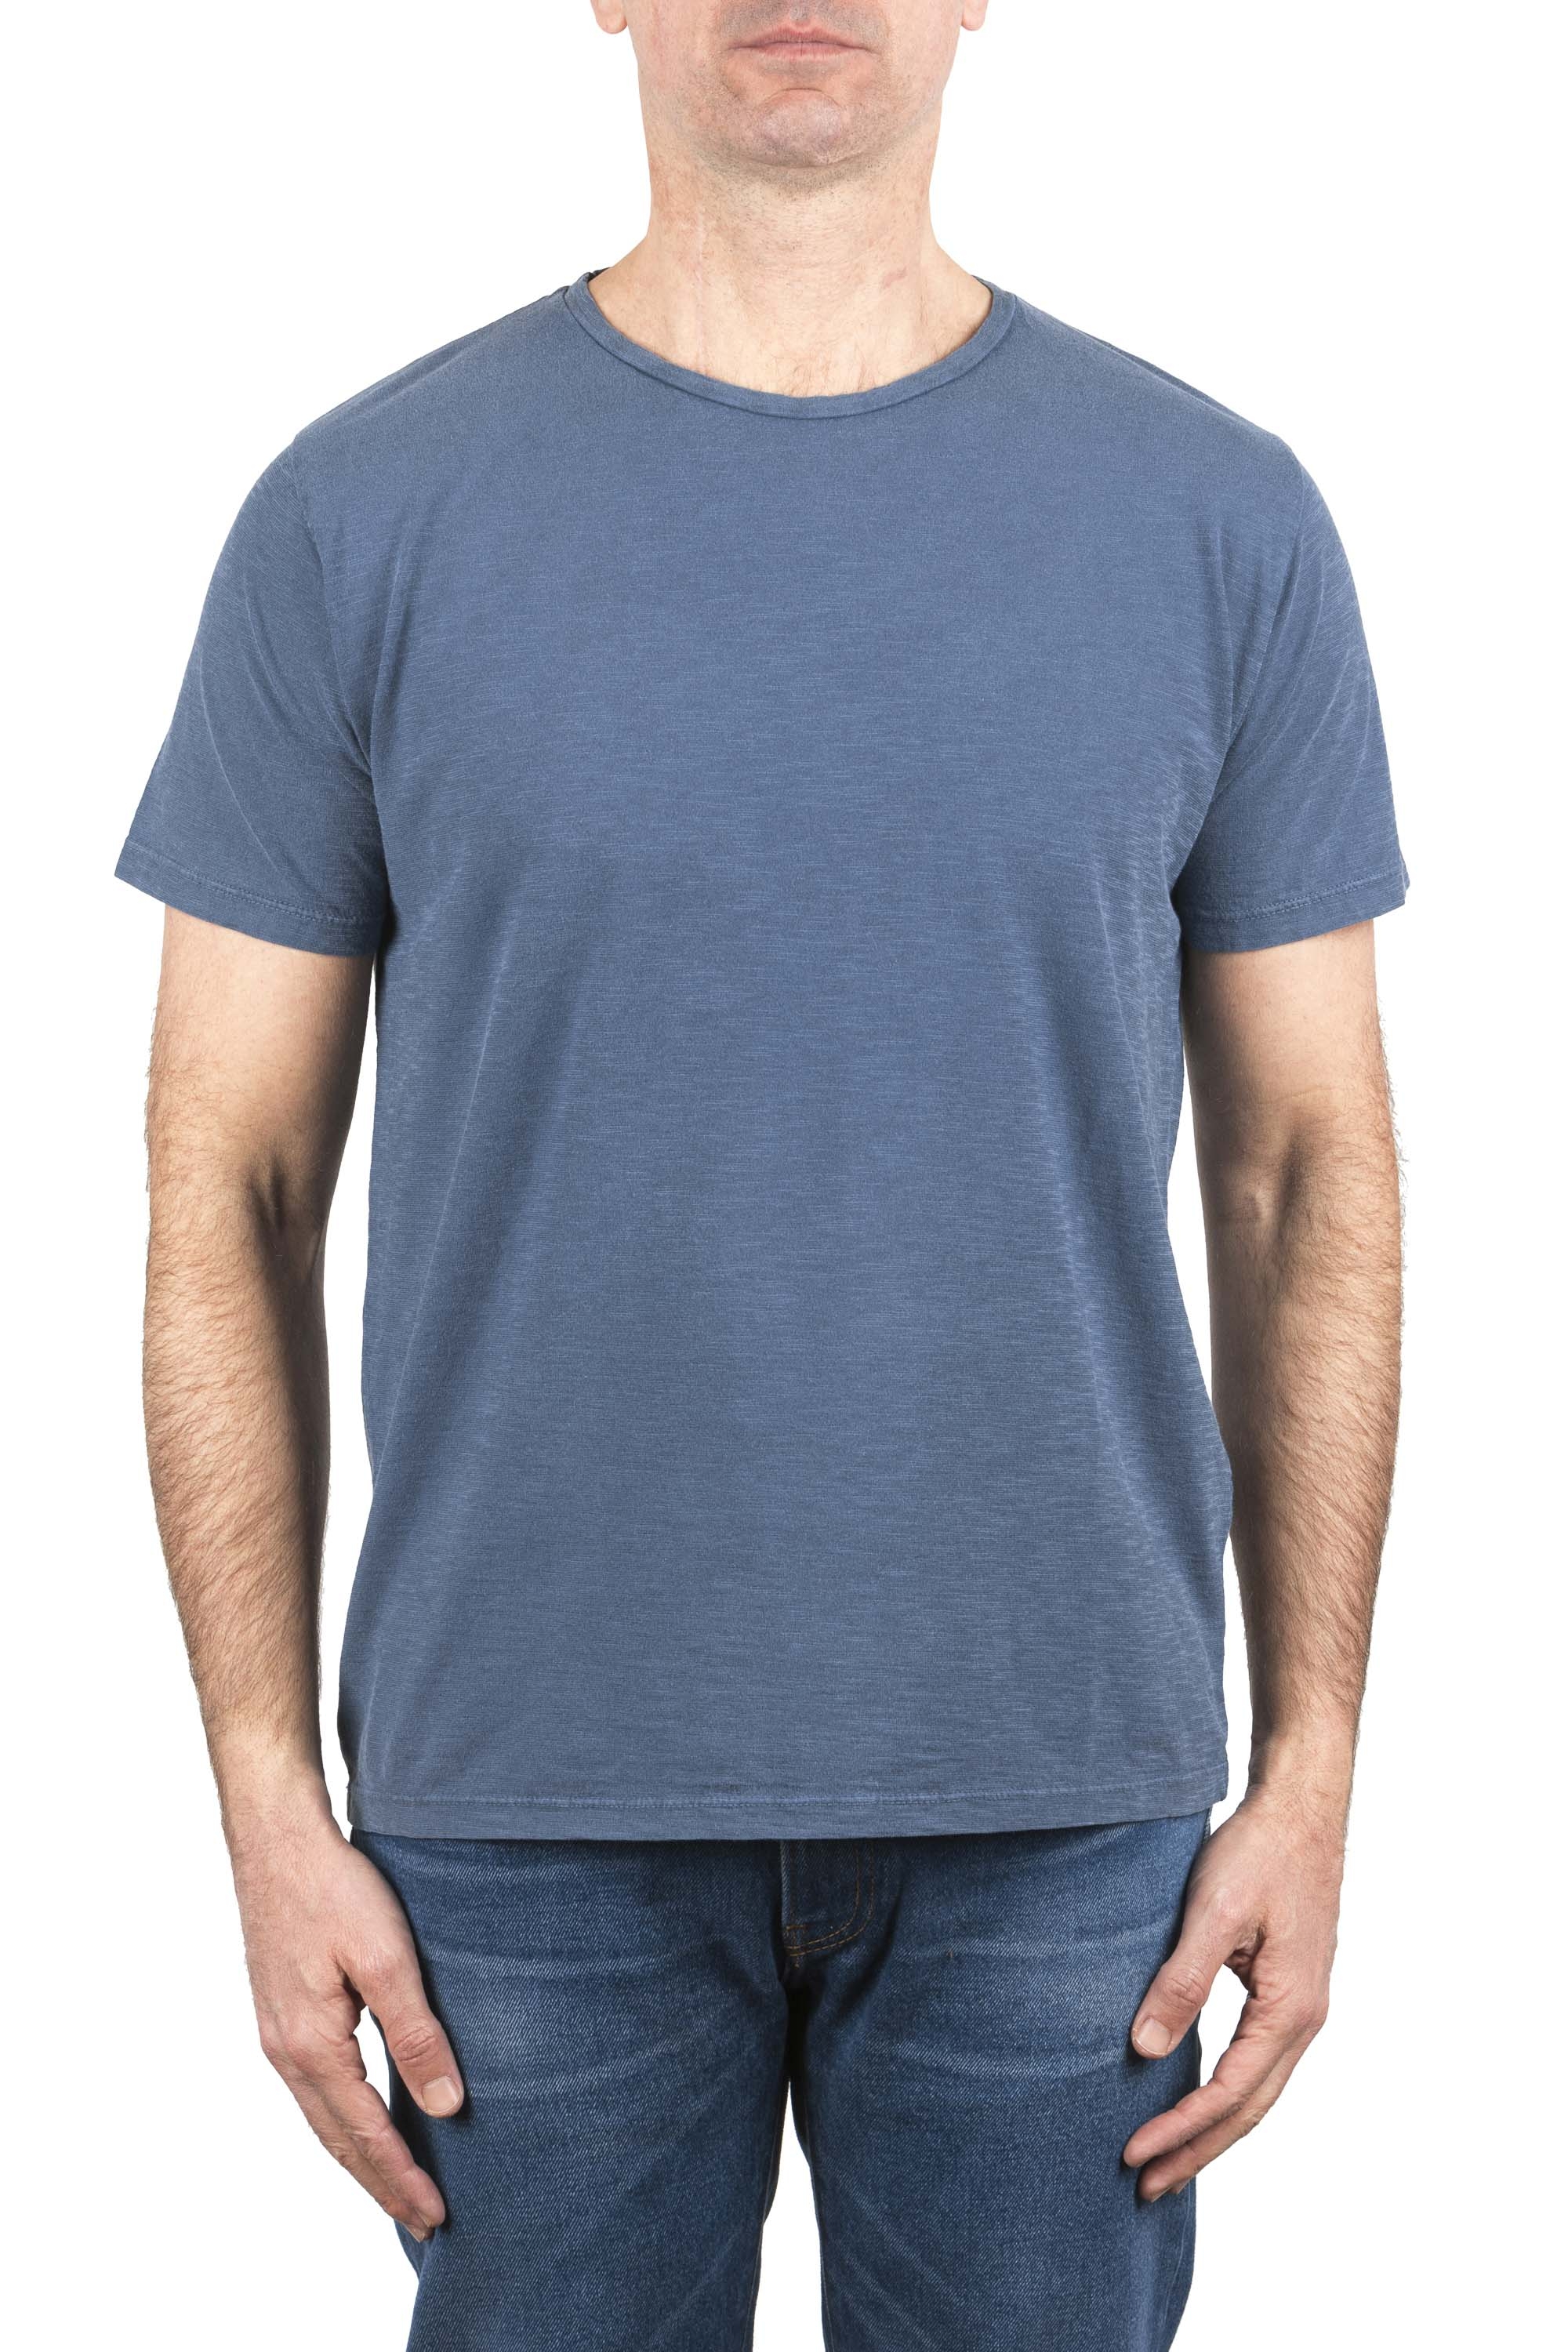 SBU 05017_24SS T-shirt girocollo aperto in cotone fiammato blu indaco 01